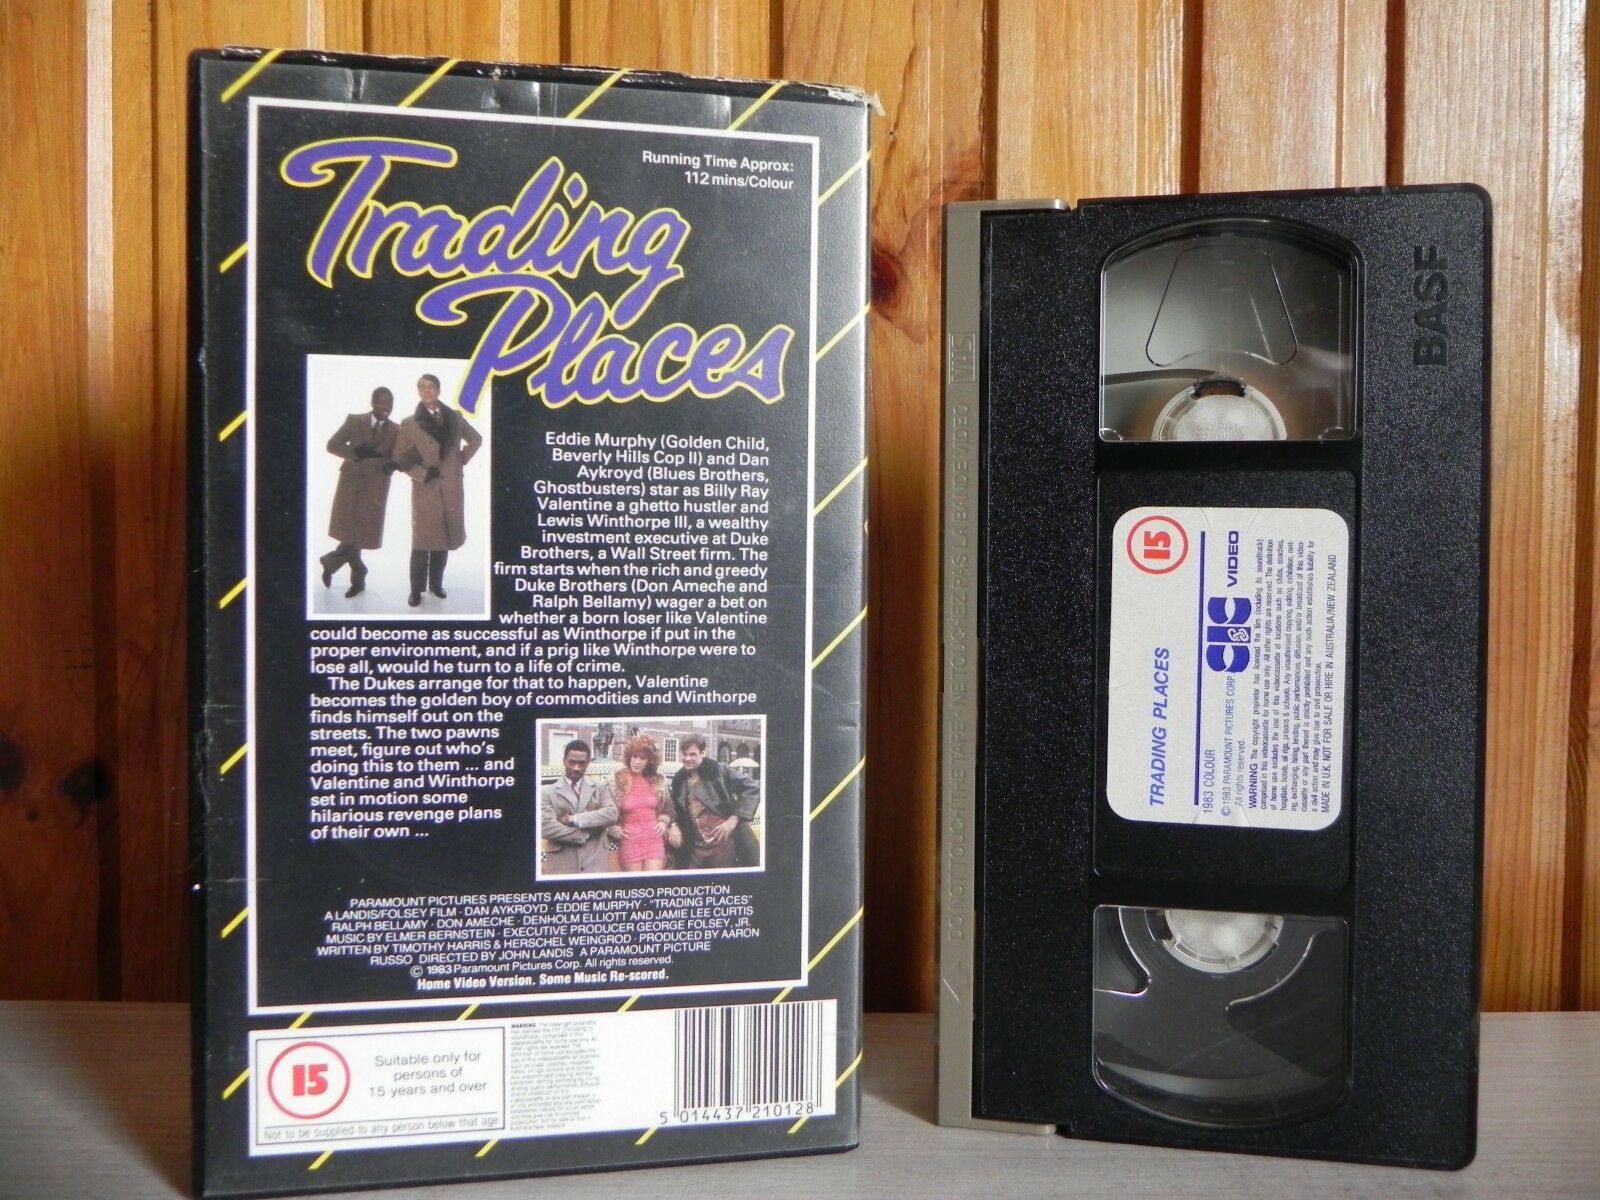 Trading Places - CIC Cideo - Comedy - Dan Aykroyd - Eddie Murphy - Pal VHS-